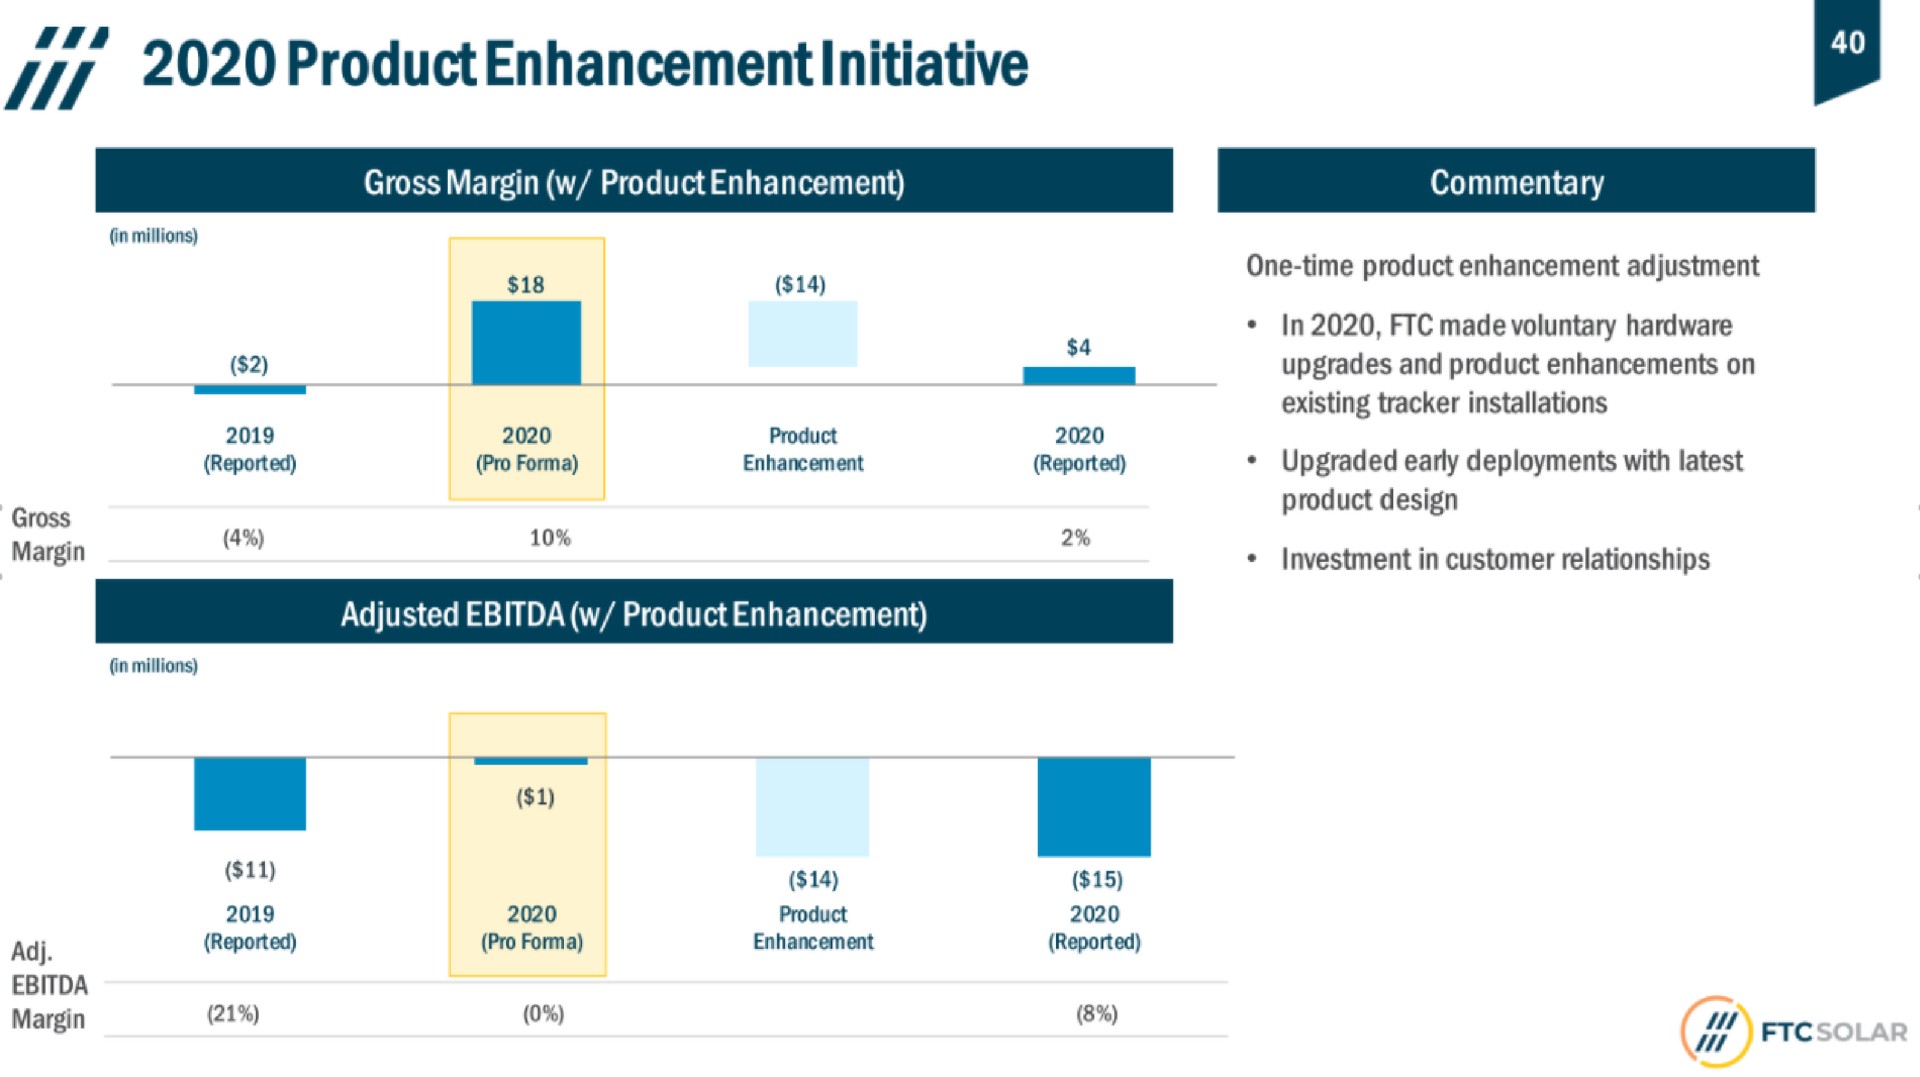 product enhancement initiative | FTC Solar